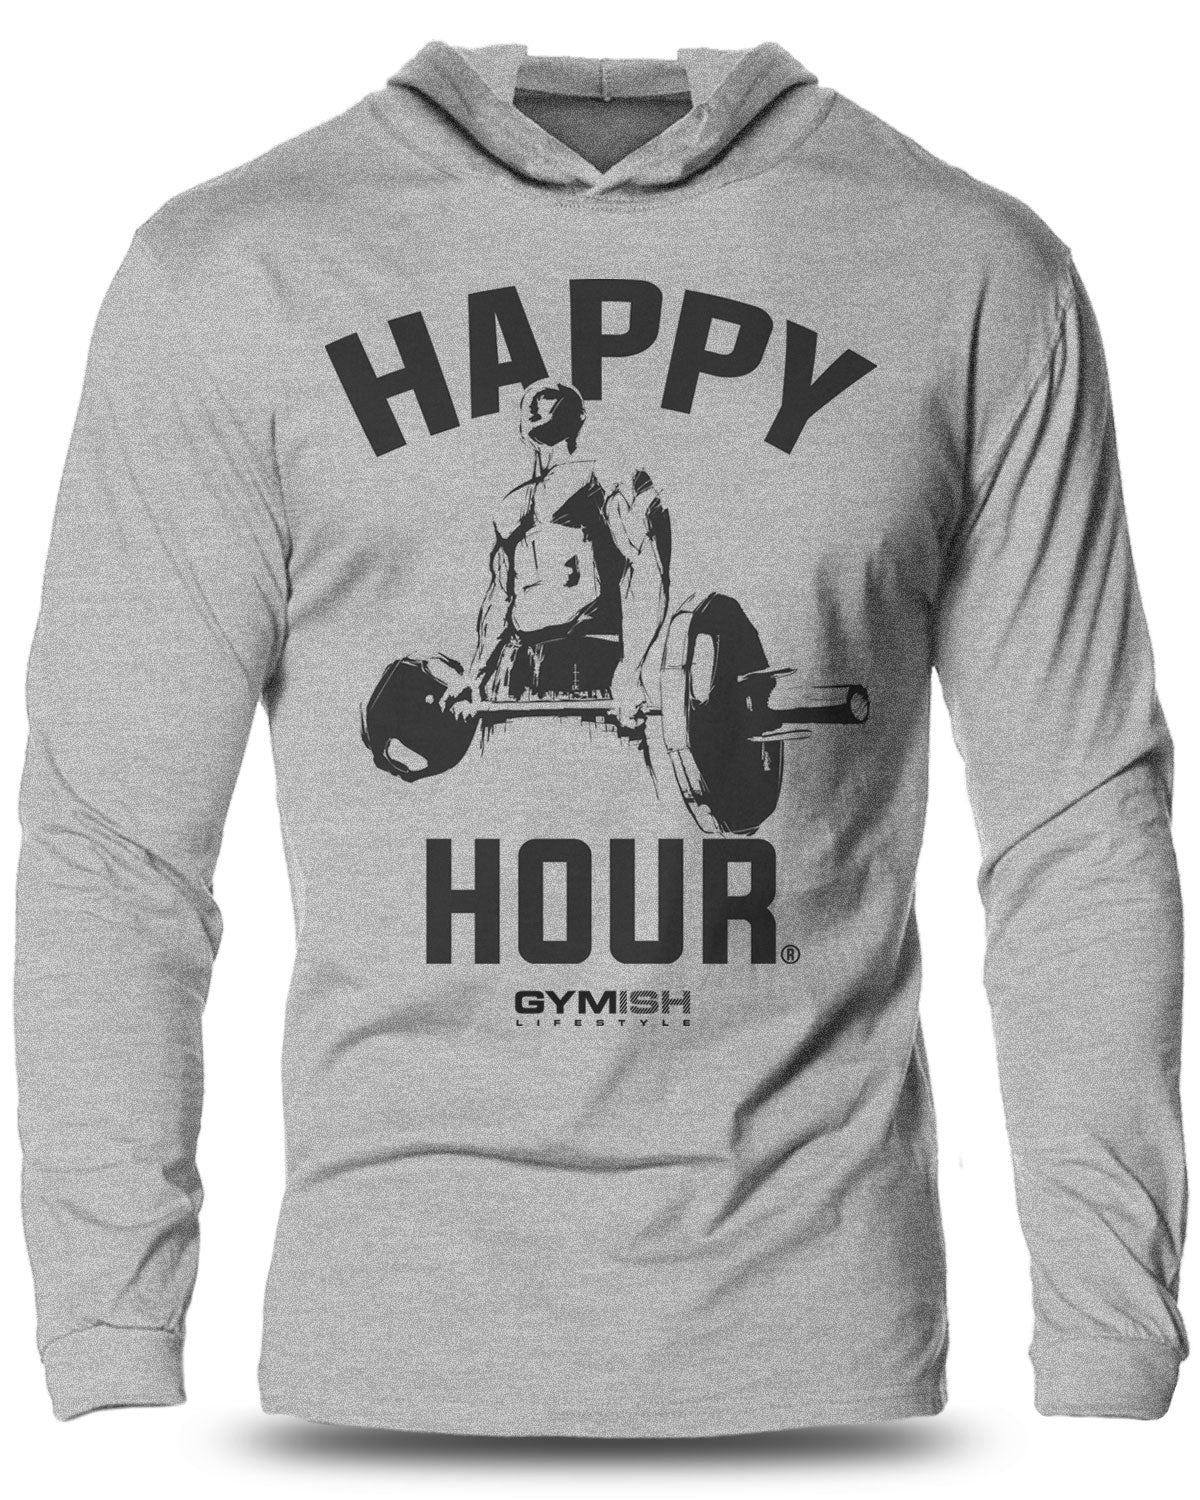 002-HAPPY HOUR Lightweight Long Sleeve Hooded T-shirt for Men